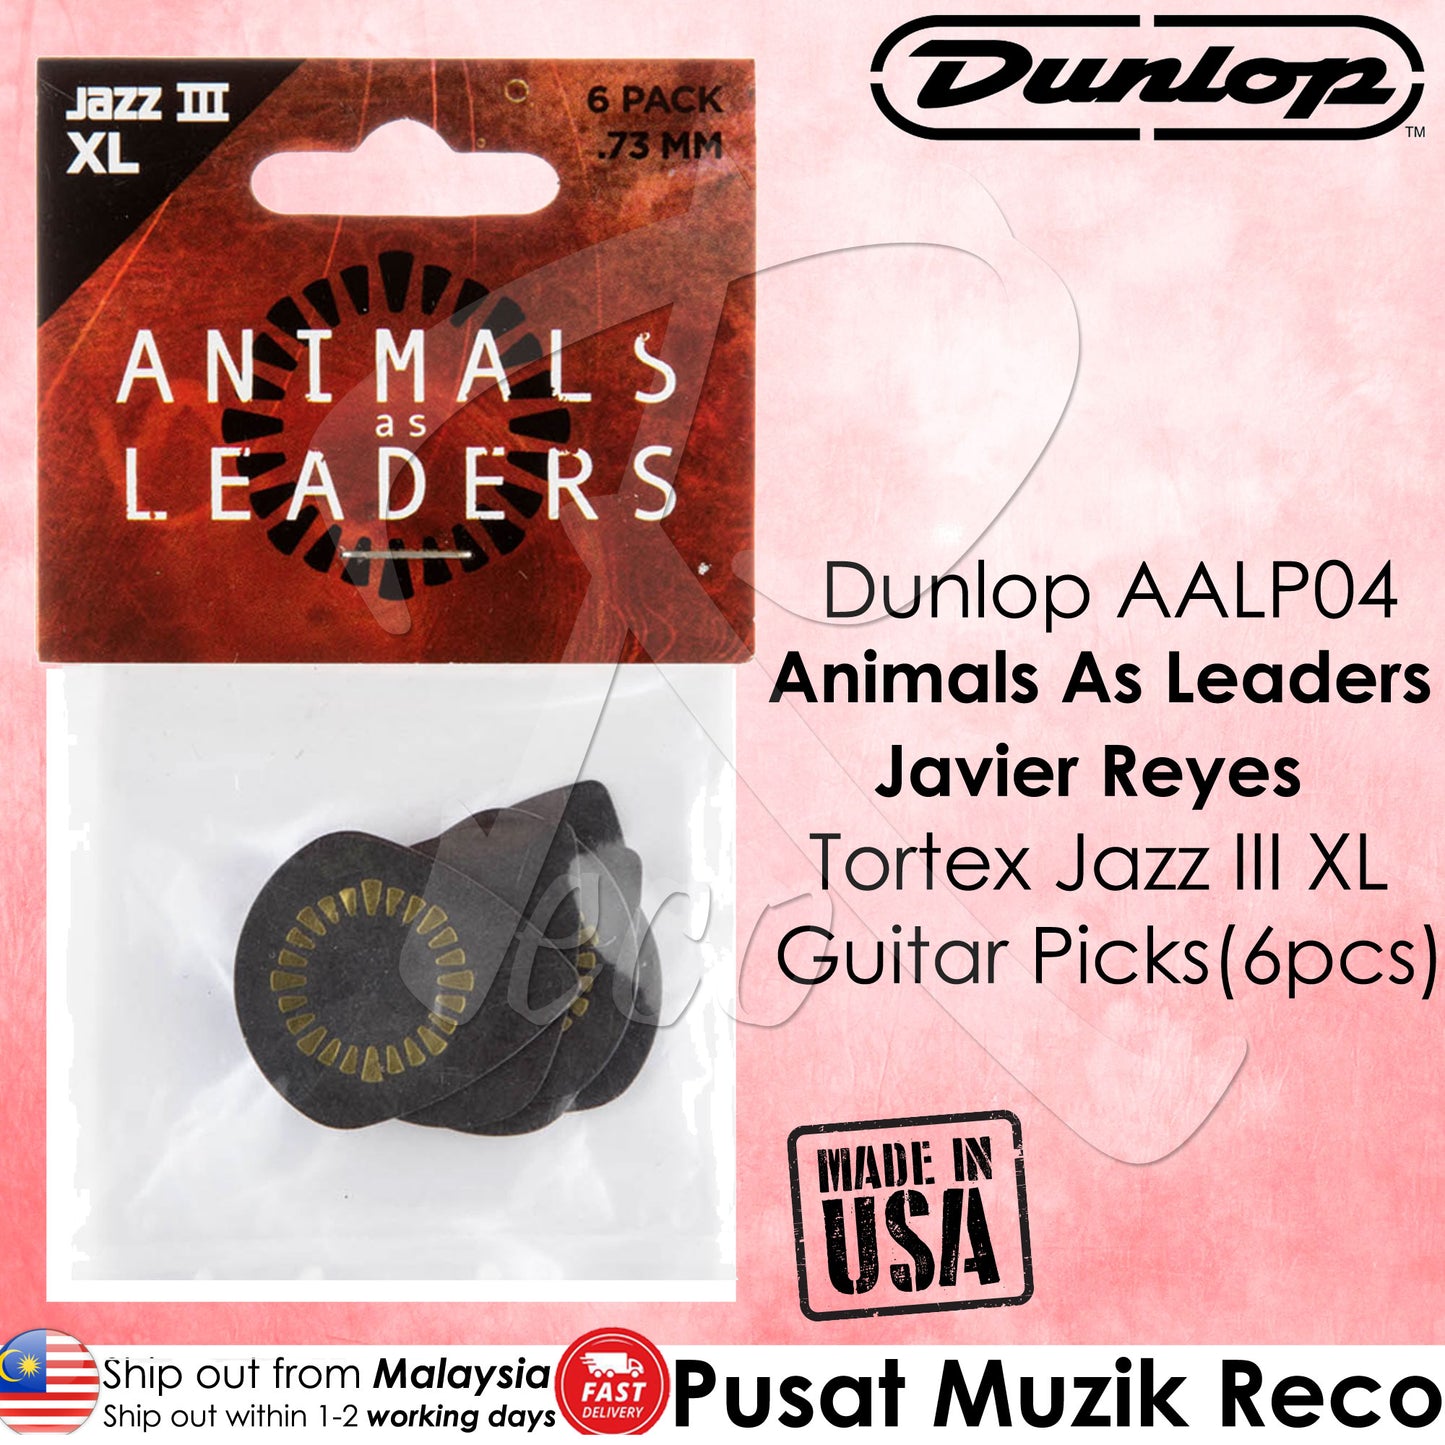 Jim Dunlop AALP04 Animals As Leaders Javier Reyes Tortex Jazz III XL Guitar Picks (6pcs) | Reco Music Malaysia